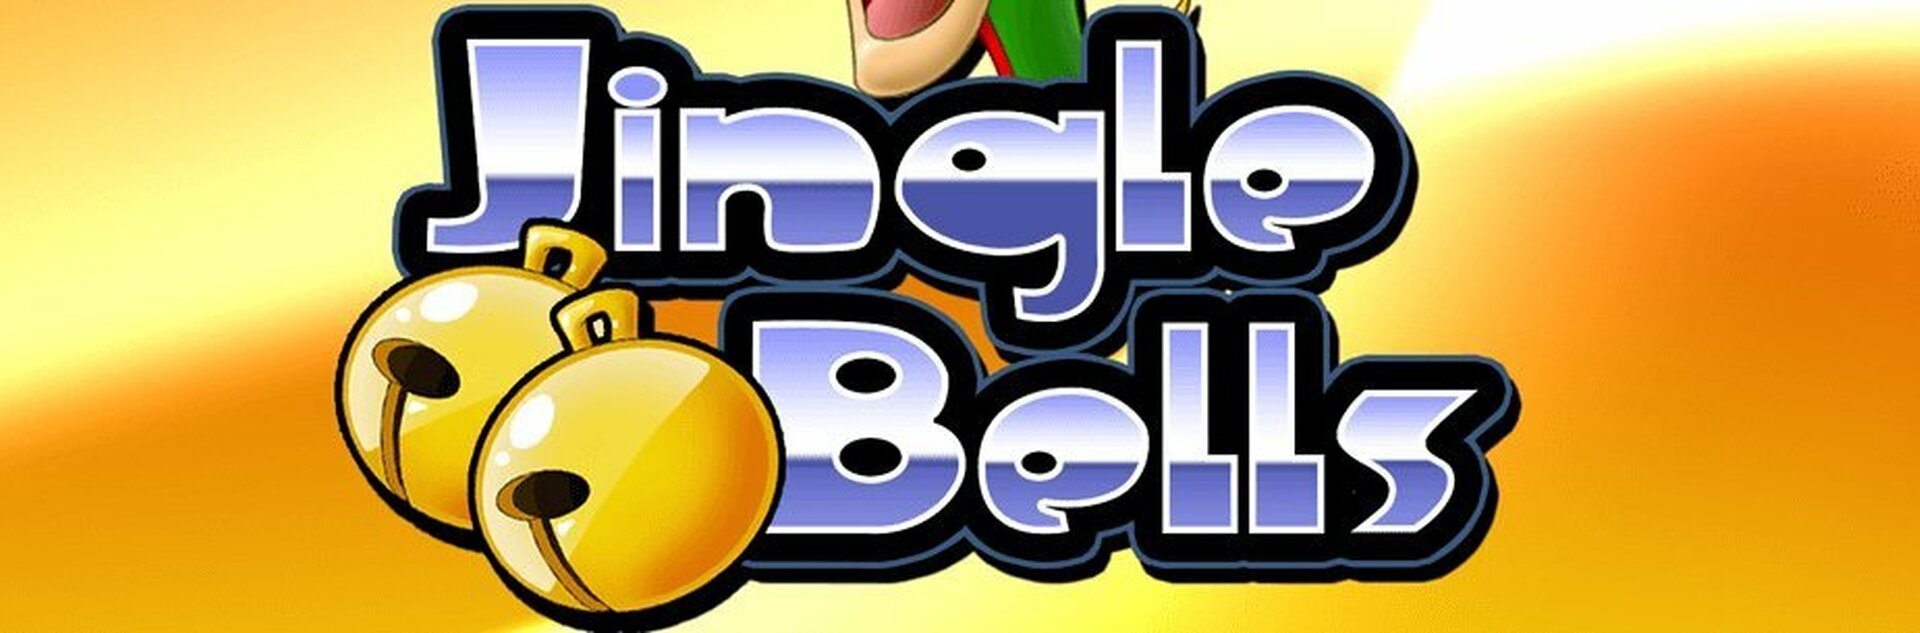 Jingle Bells (Tom Horn Gaming) Free Spins